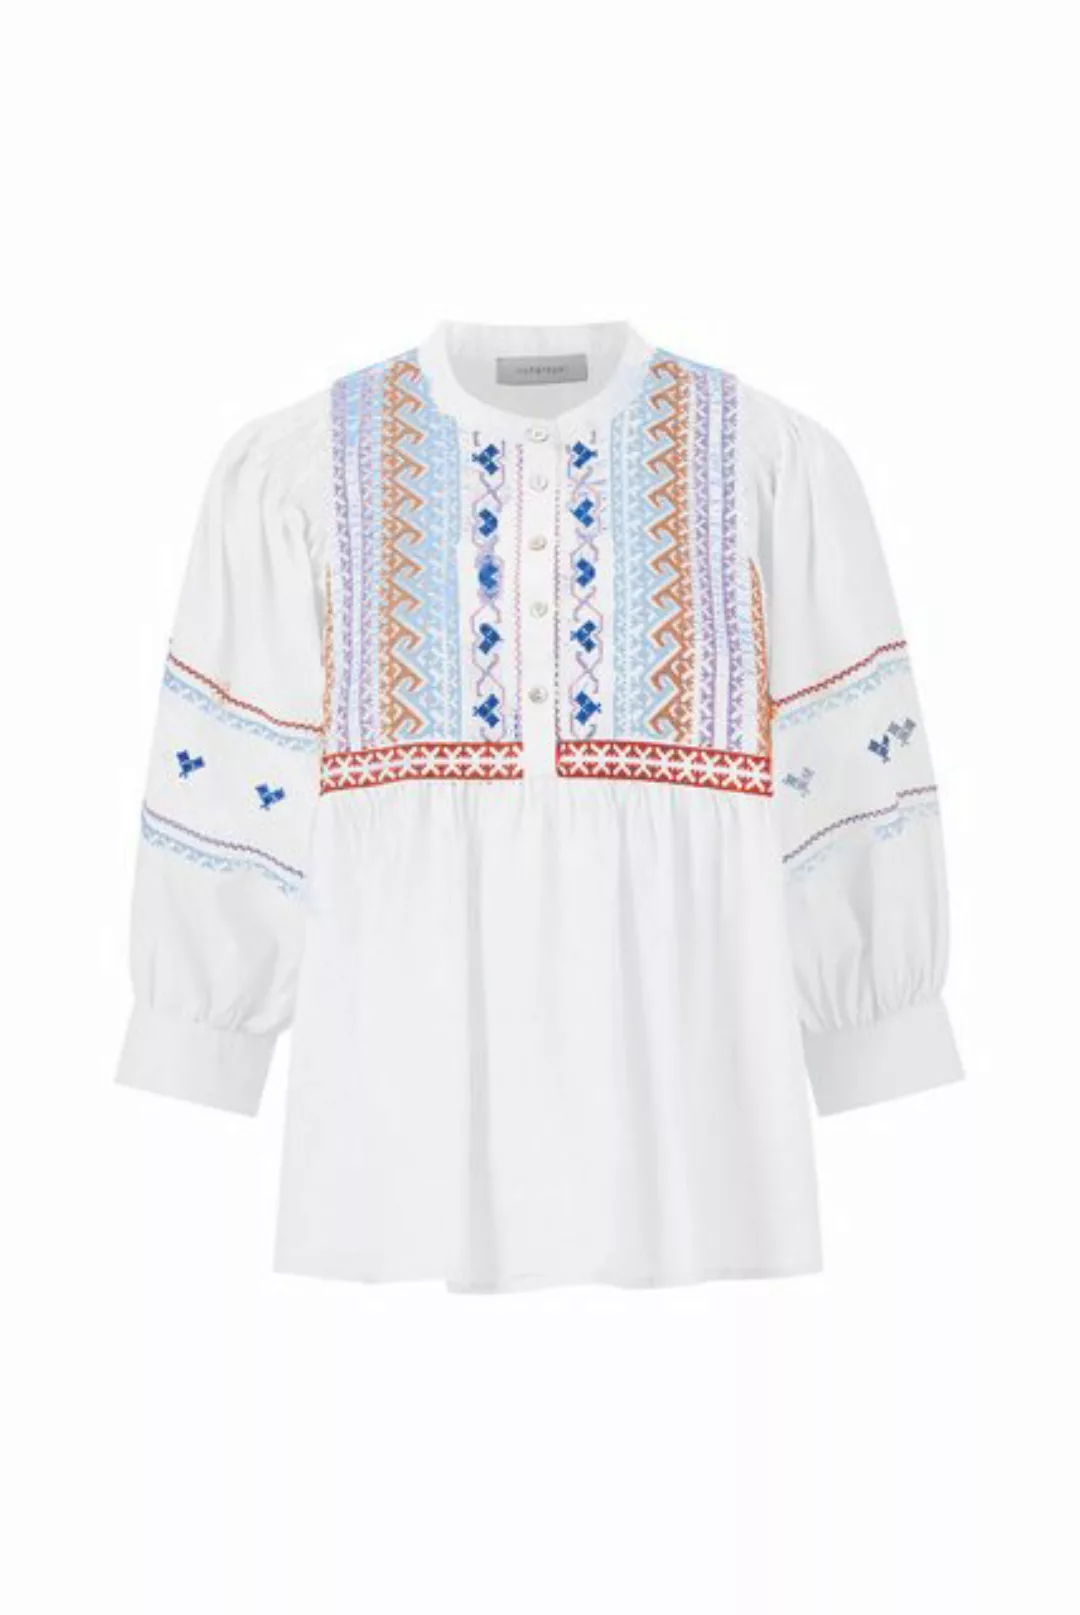 Rich & Royal Blusenshirt blouse with embroidery organic, white günstig online kaufen